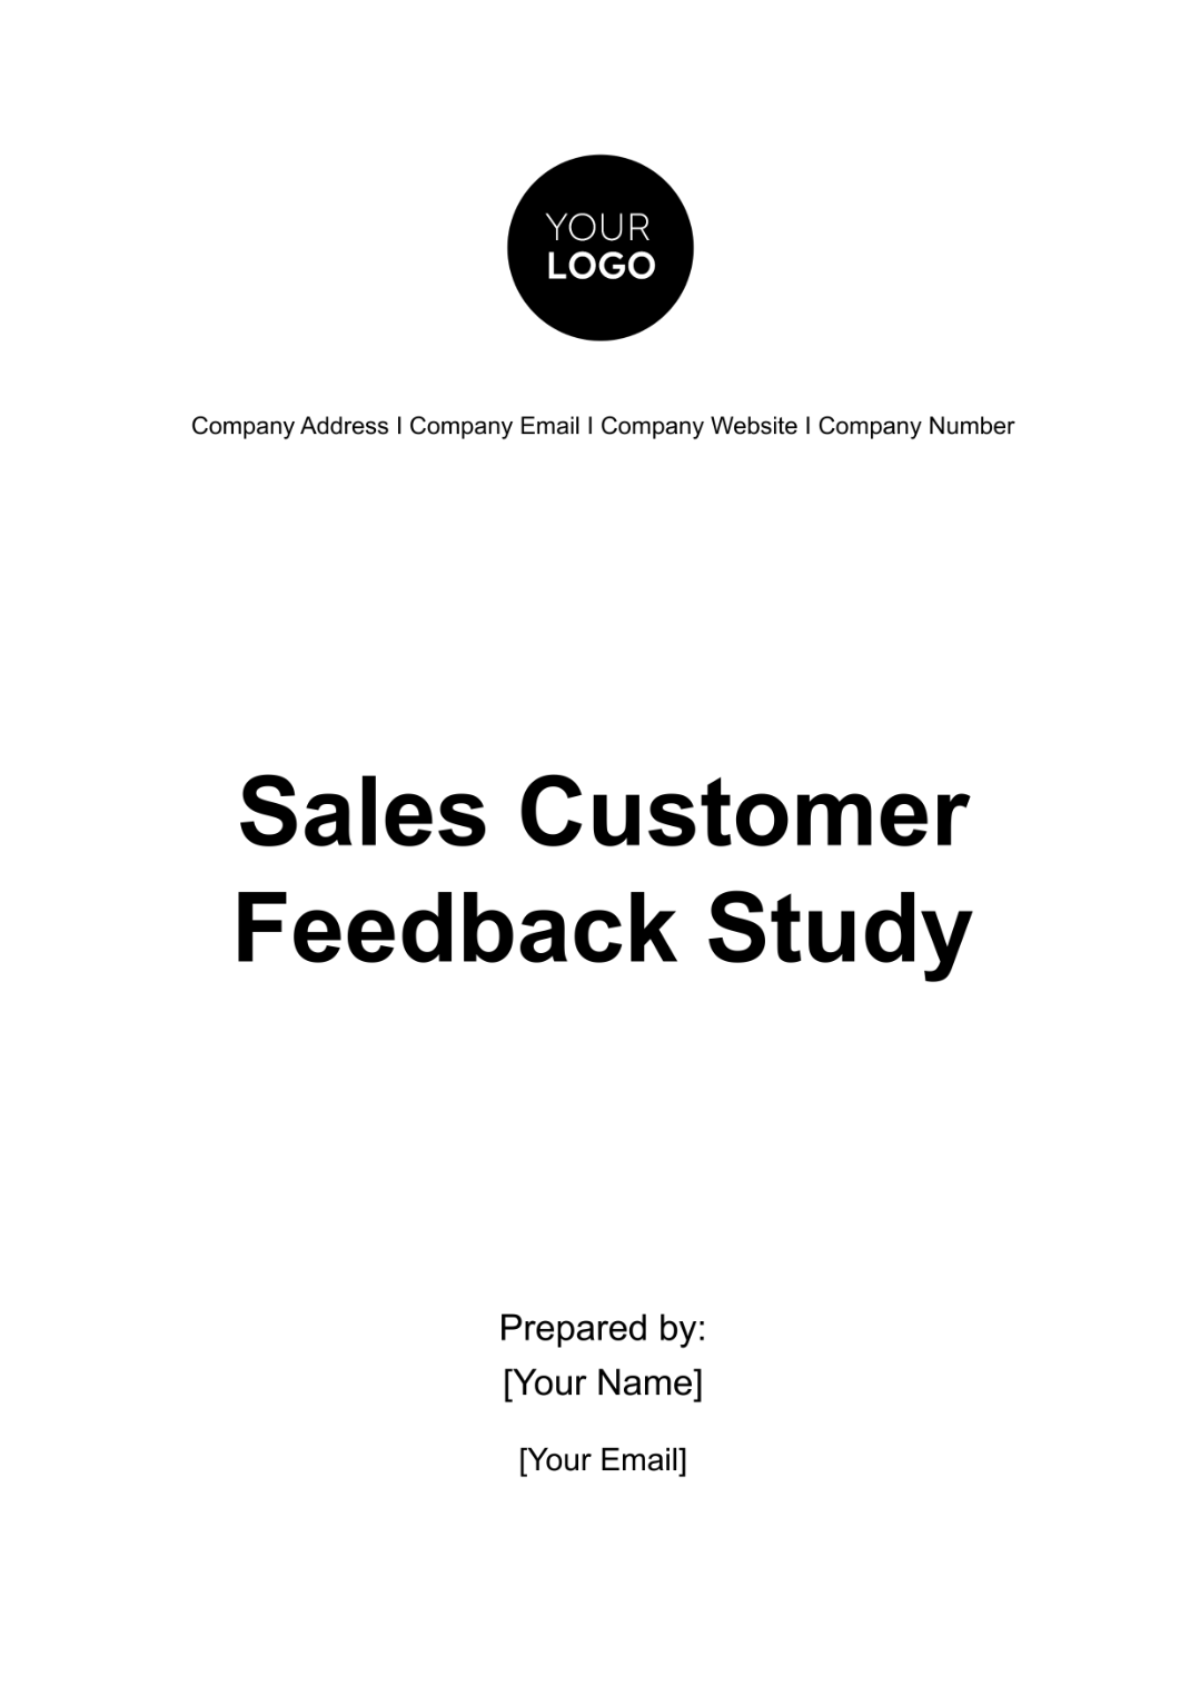 Sales Customer Feedback Study Template